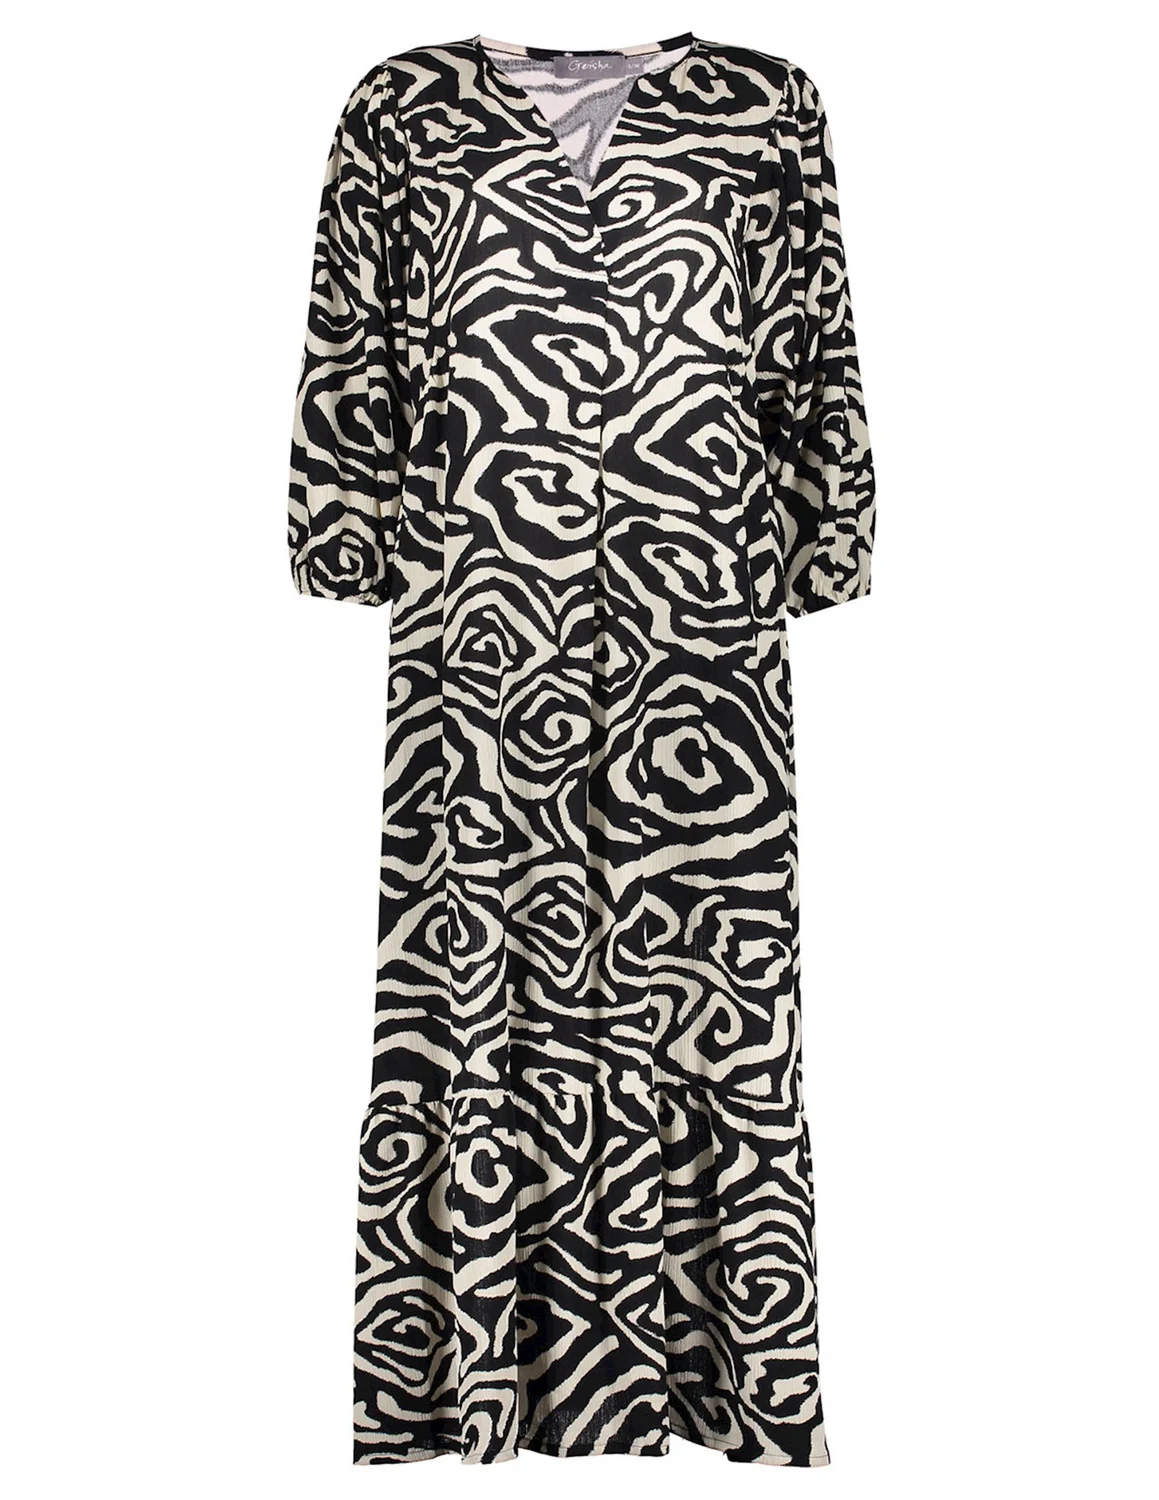 Geisha Dress 37108-20 zwart/wit kopen bij The Stone